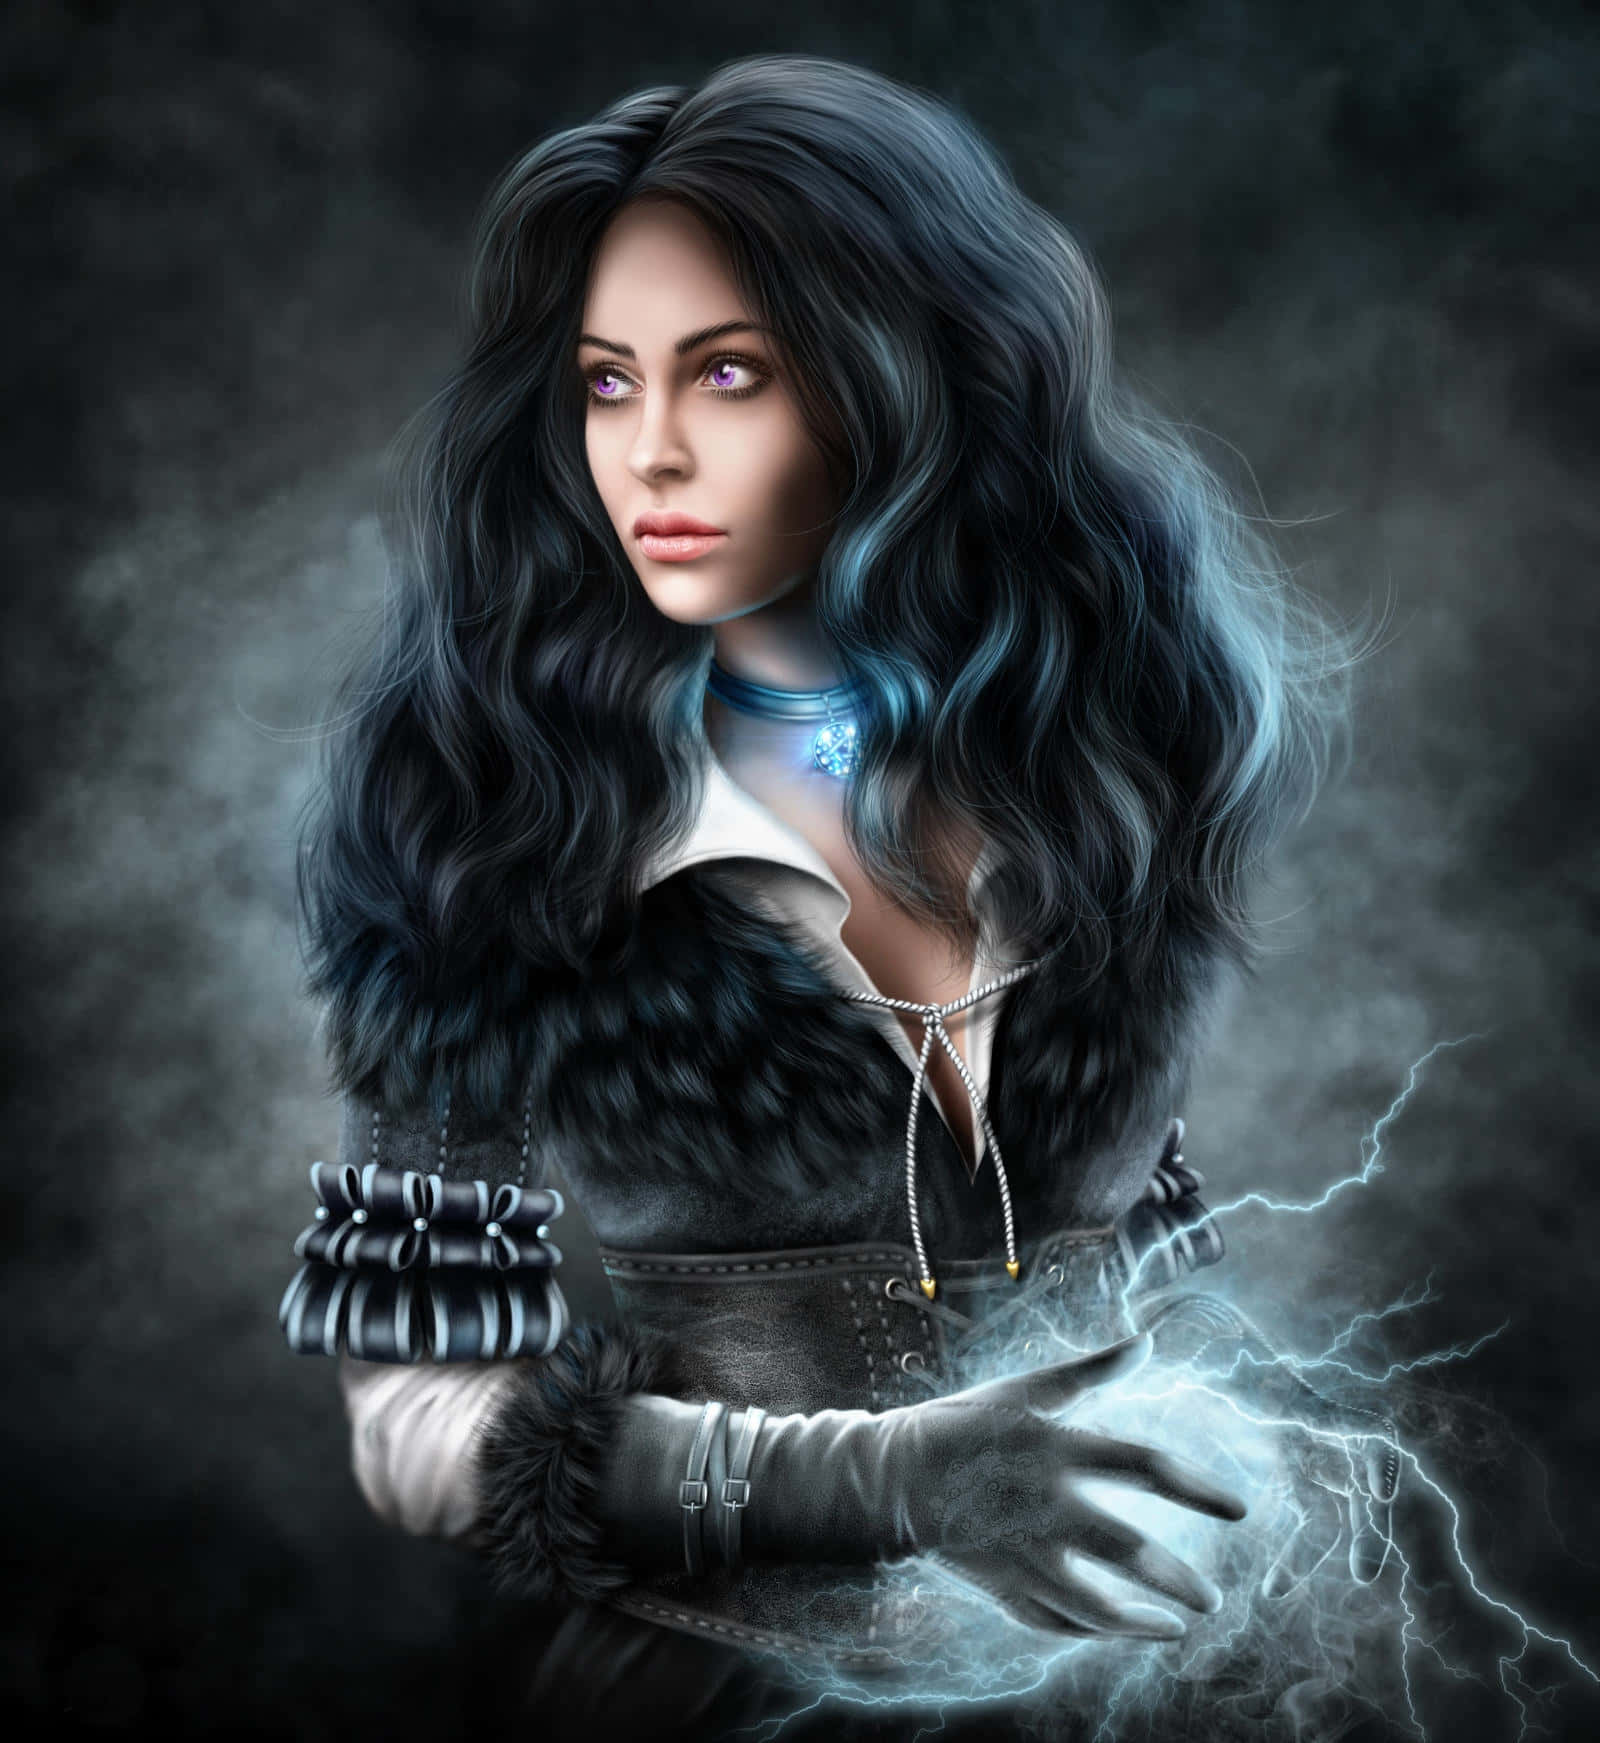 Yennefer Of Vengerberg – Powerful Sorceress Of The Witcher Series Wallpaper